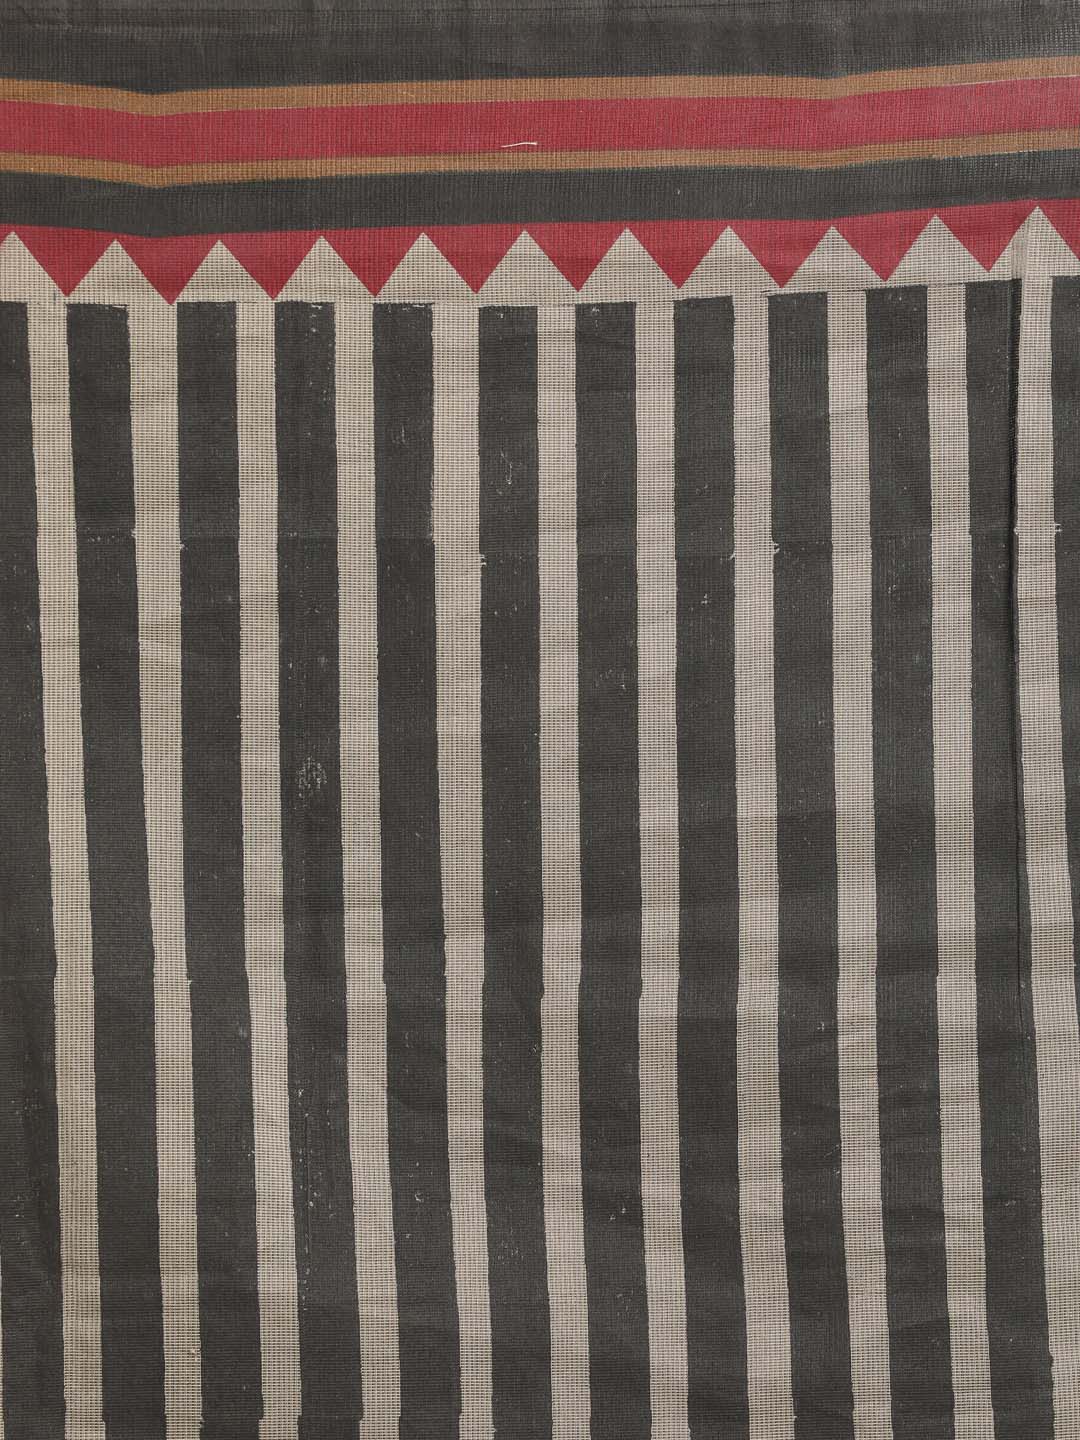 Indethnic Printed Cotton Blend Saree in black - Saree Detail View